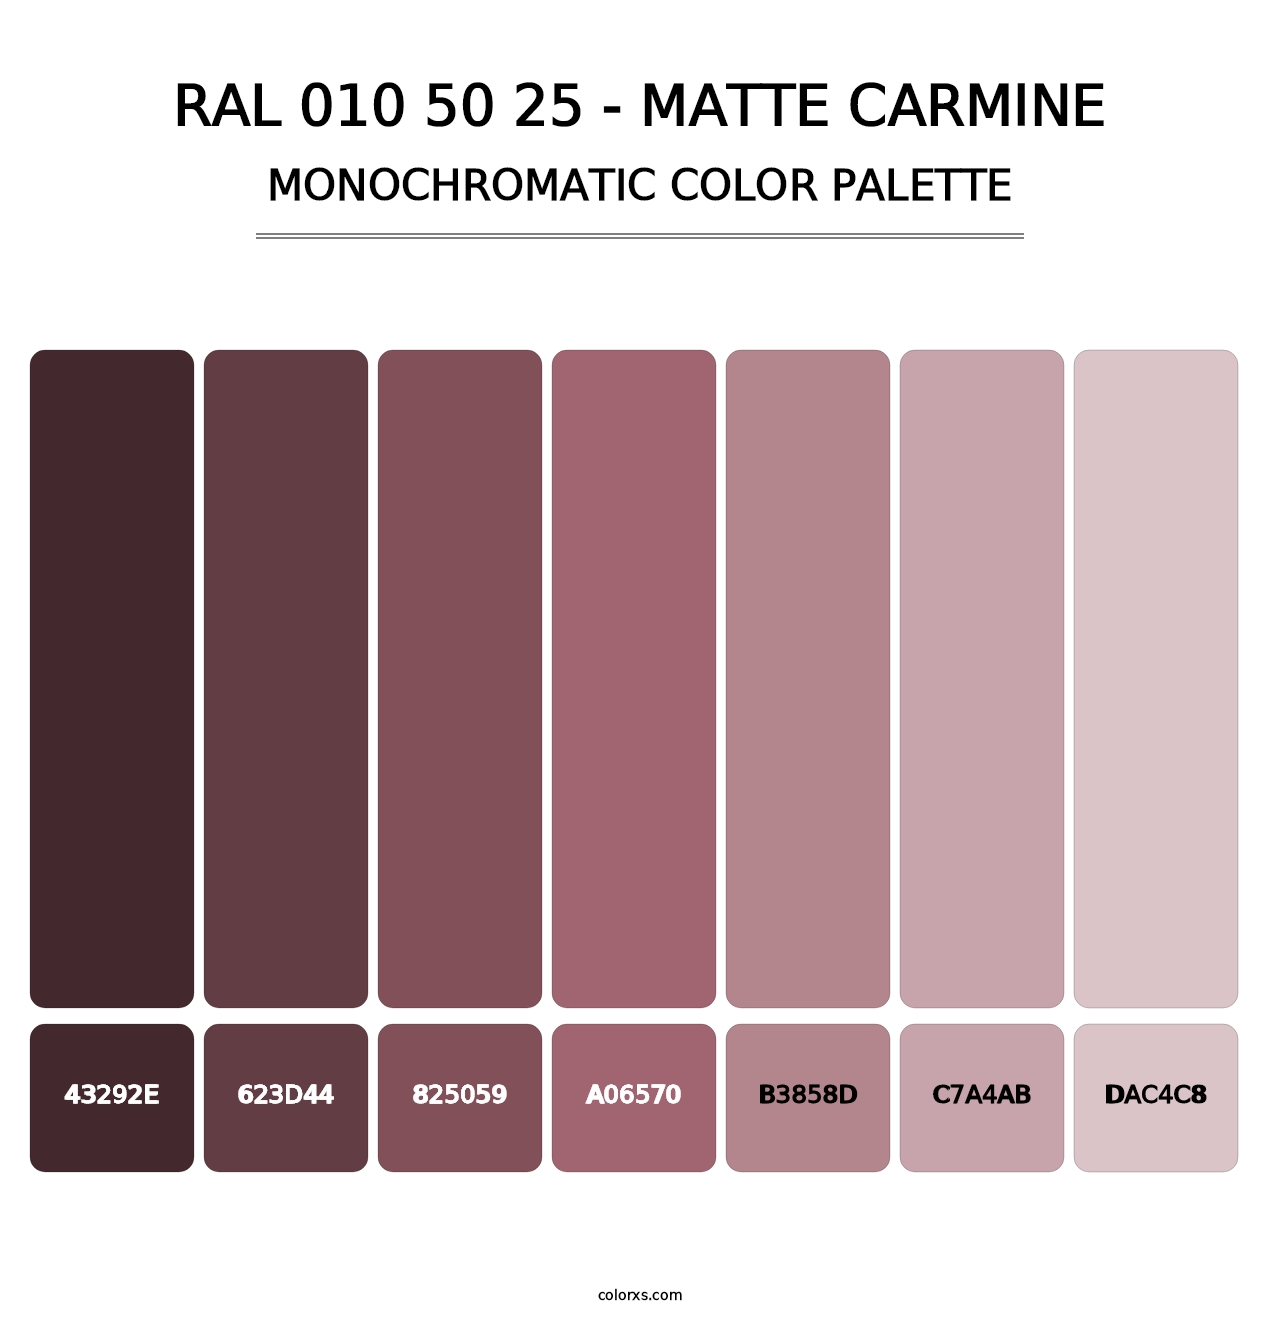 RAL 010 50 25 - Matte Carmine - Monochromatic Color Palette